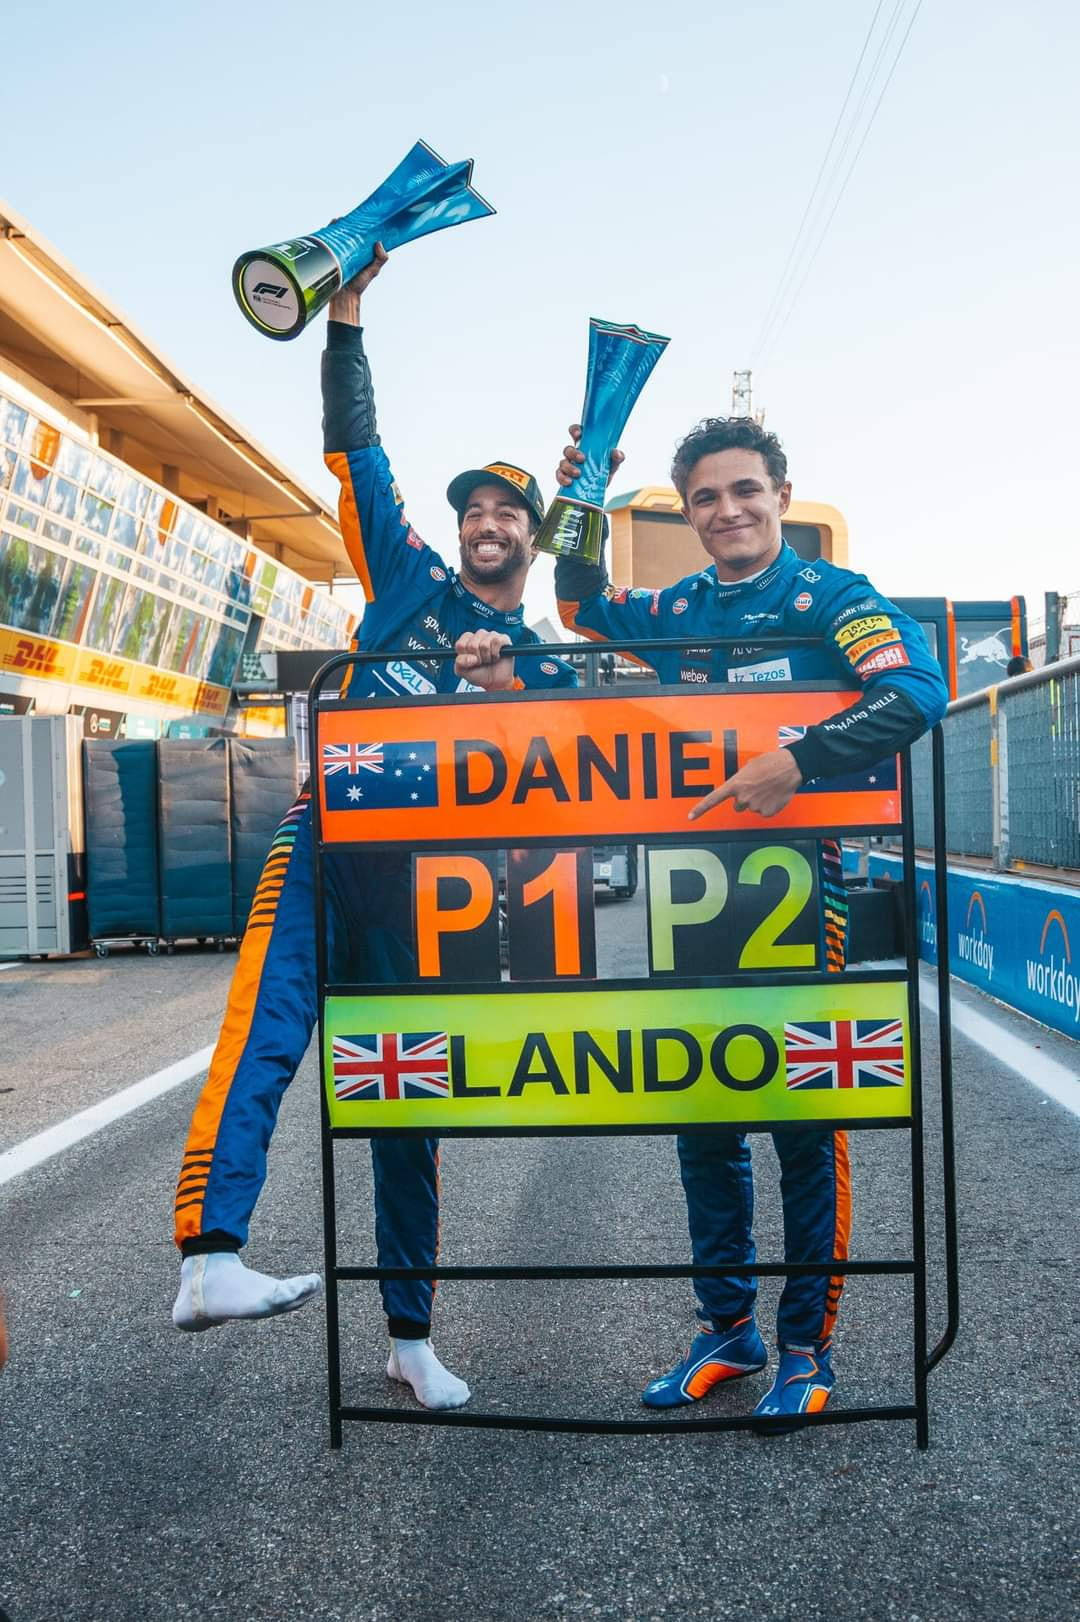 Daniel Ricciardo And Lando Norris Celebrating With Their Trophies Background